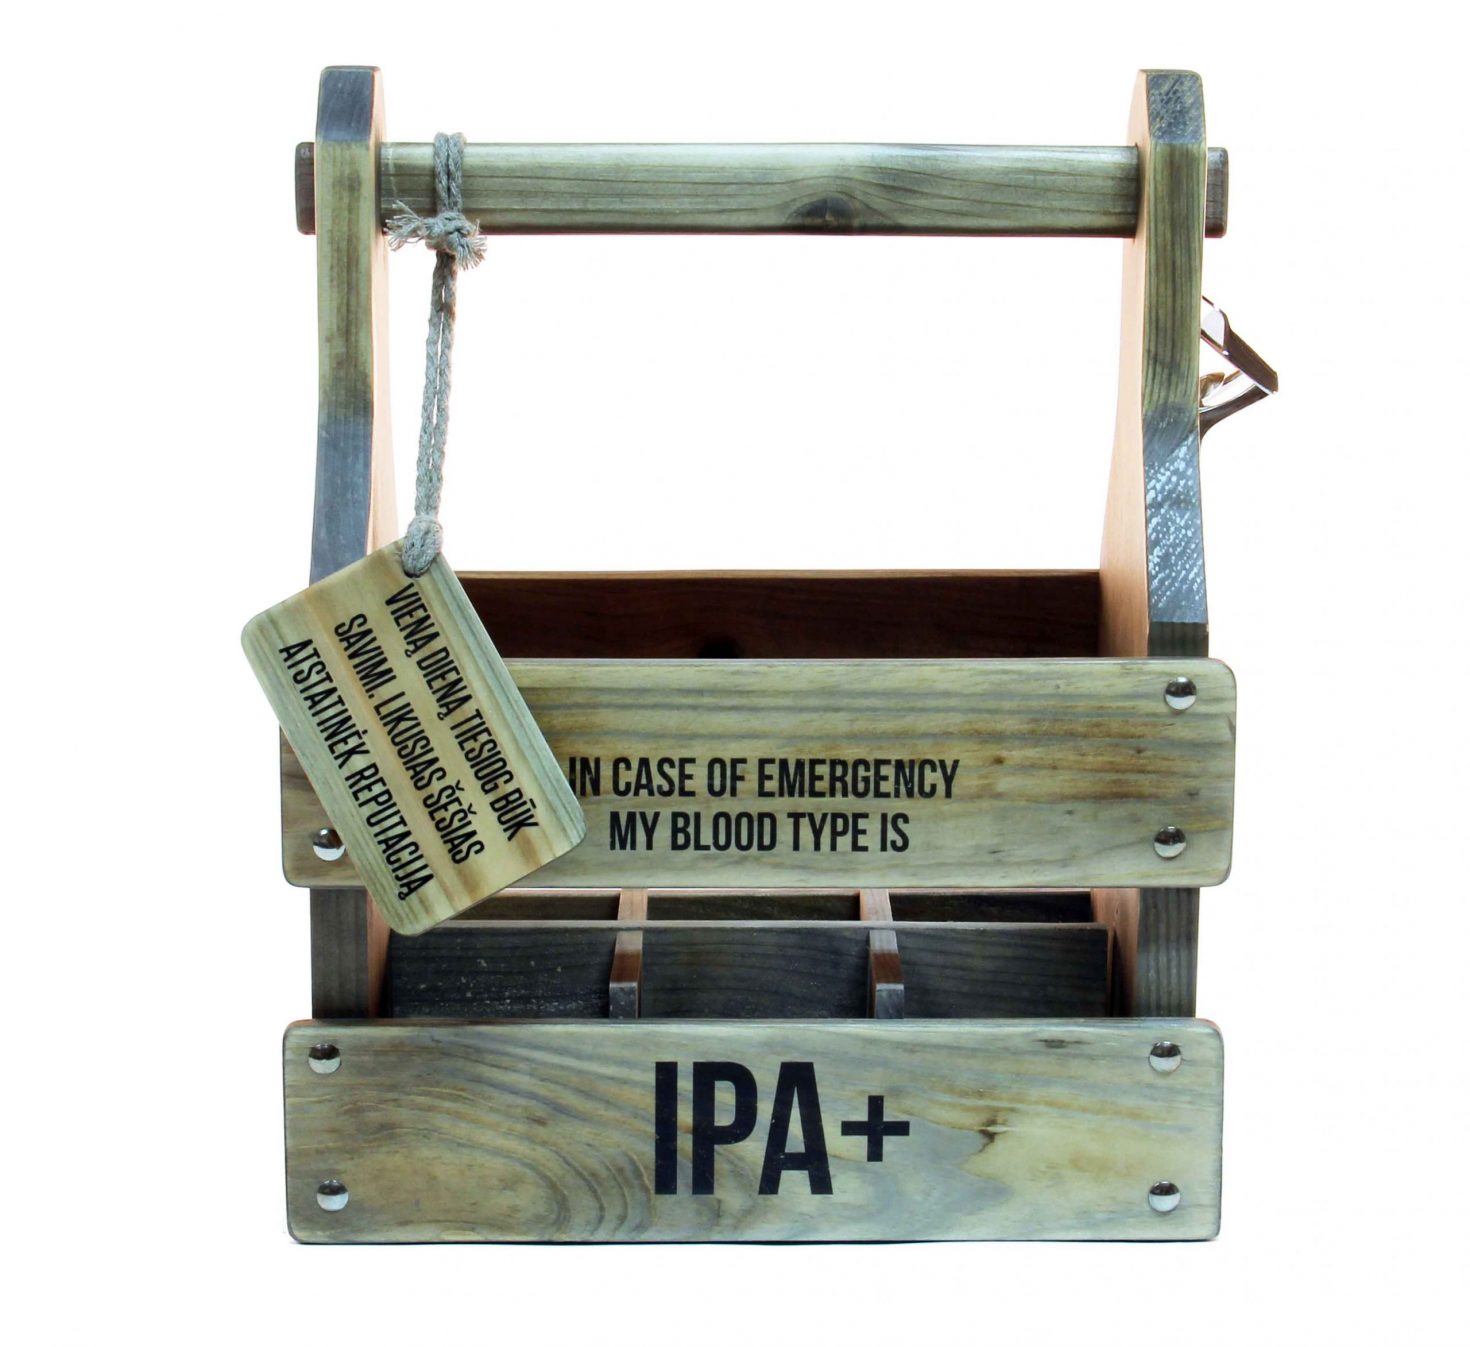 Wooden Beer crate “In case of emergency”